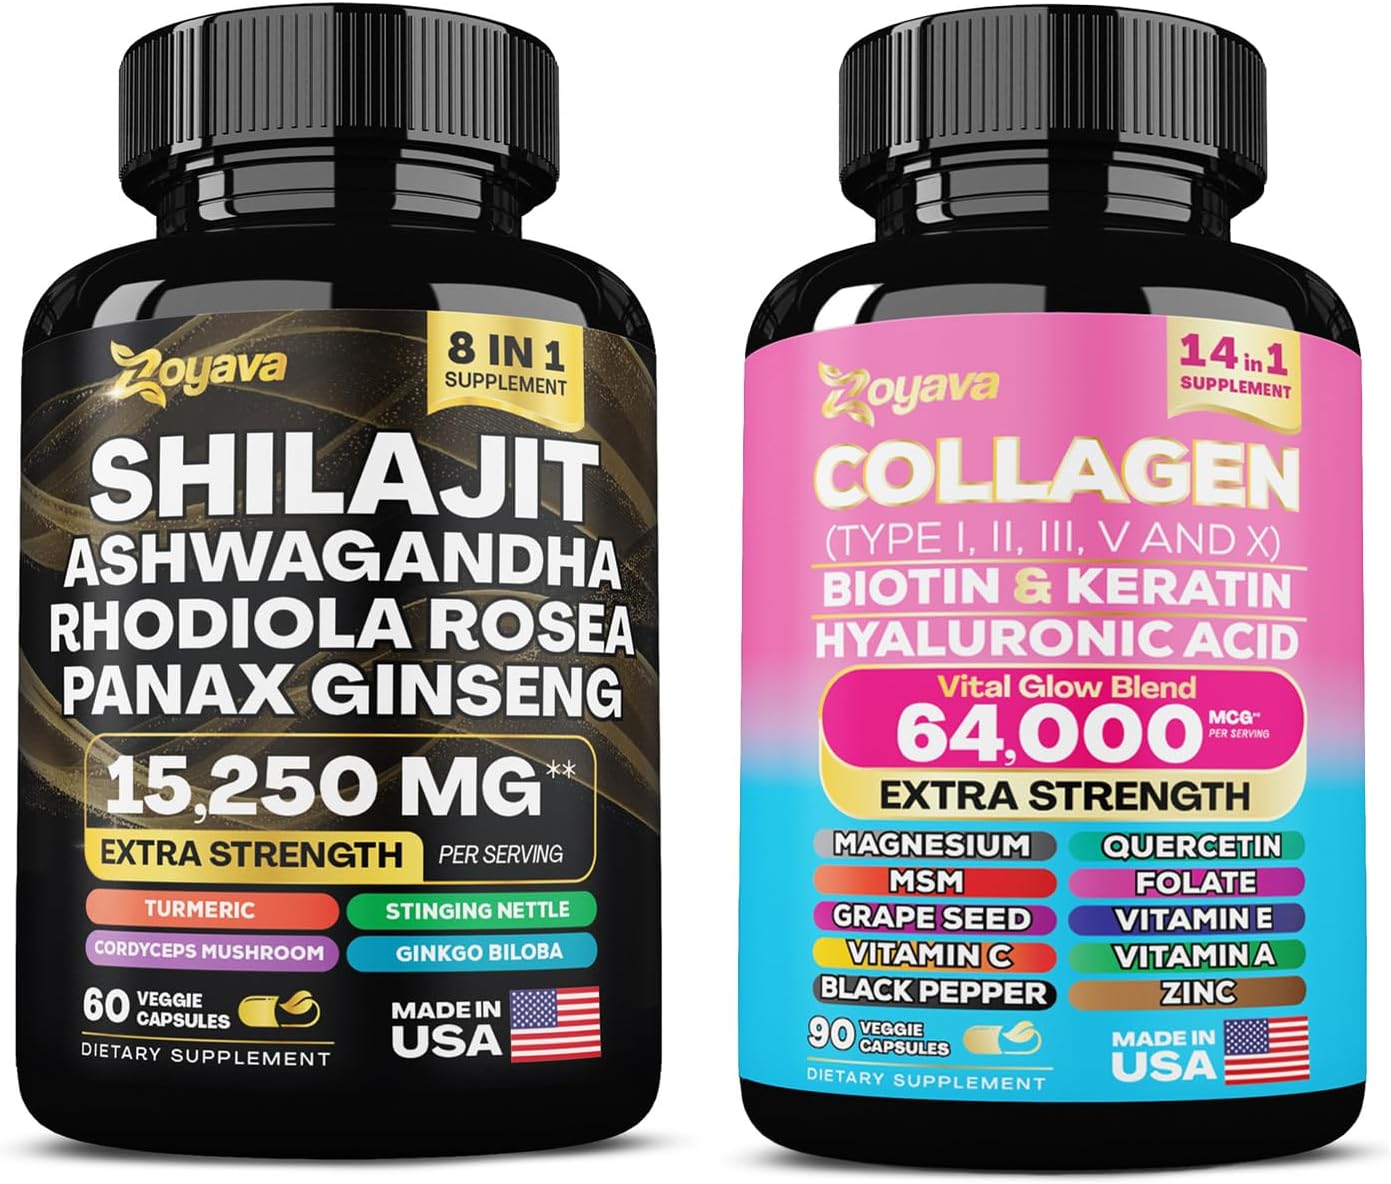 Zoyava Shilajit 8-in-1 Supplement 15,250 MG and Collagen 14-